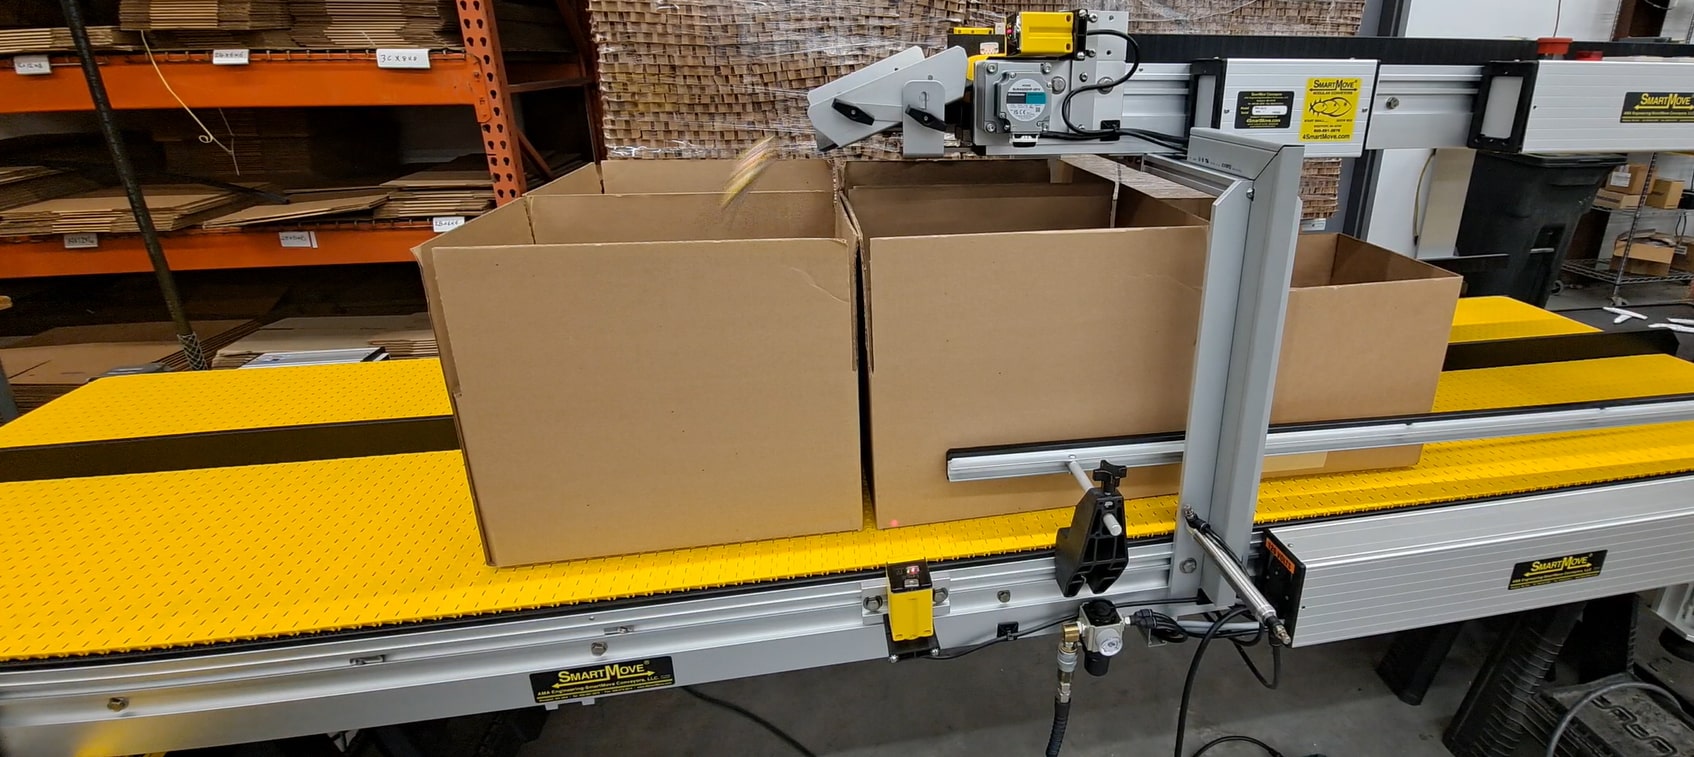 multi lane counting box filler packaging conveyor system